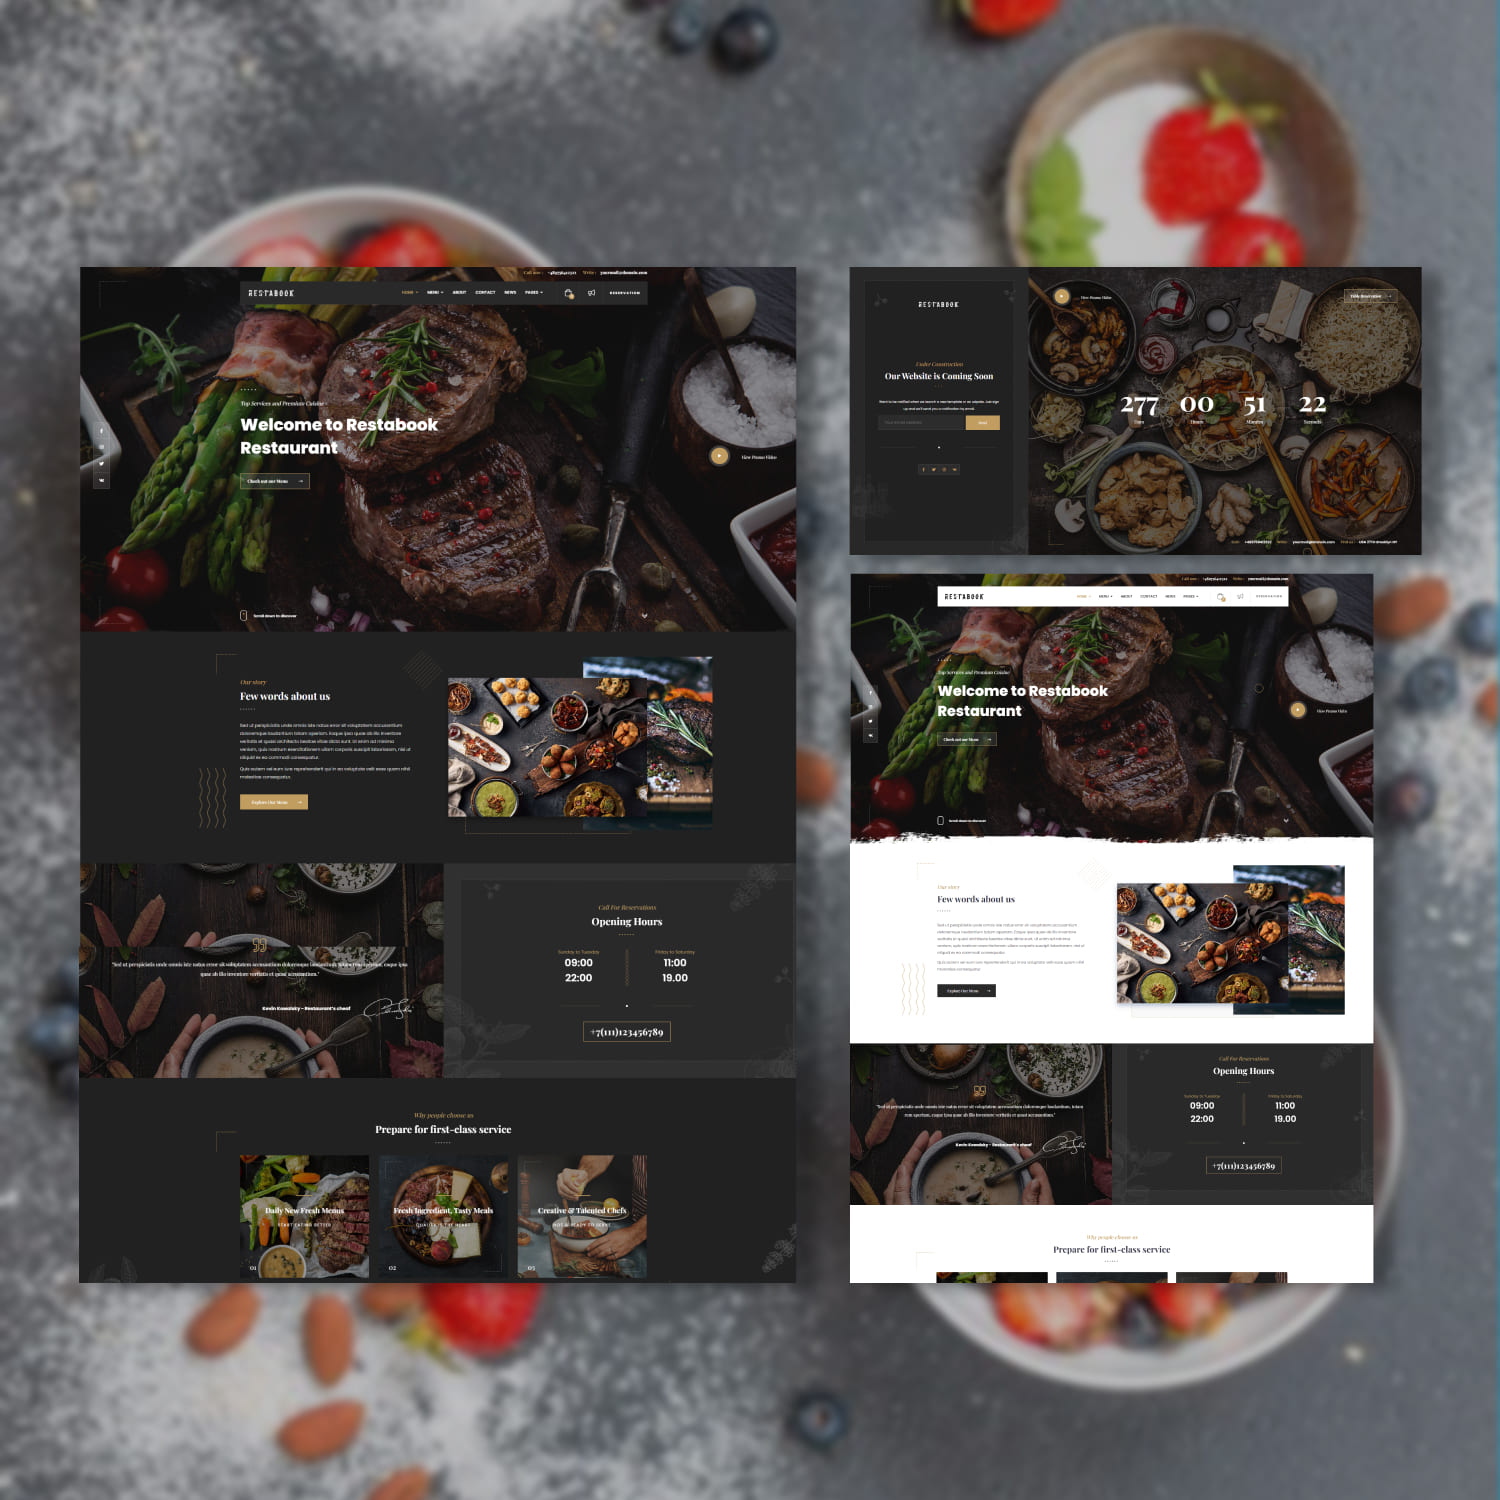 Restabook - Restaurant / Cafe / Pub WordPress Theme cover.